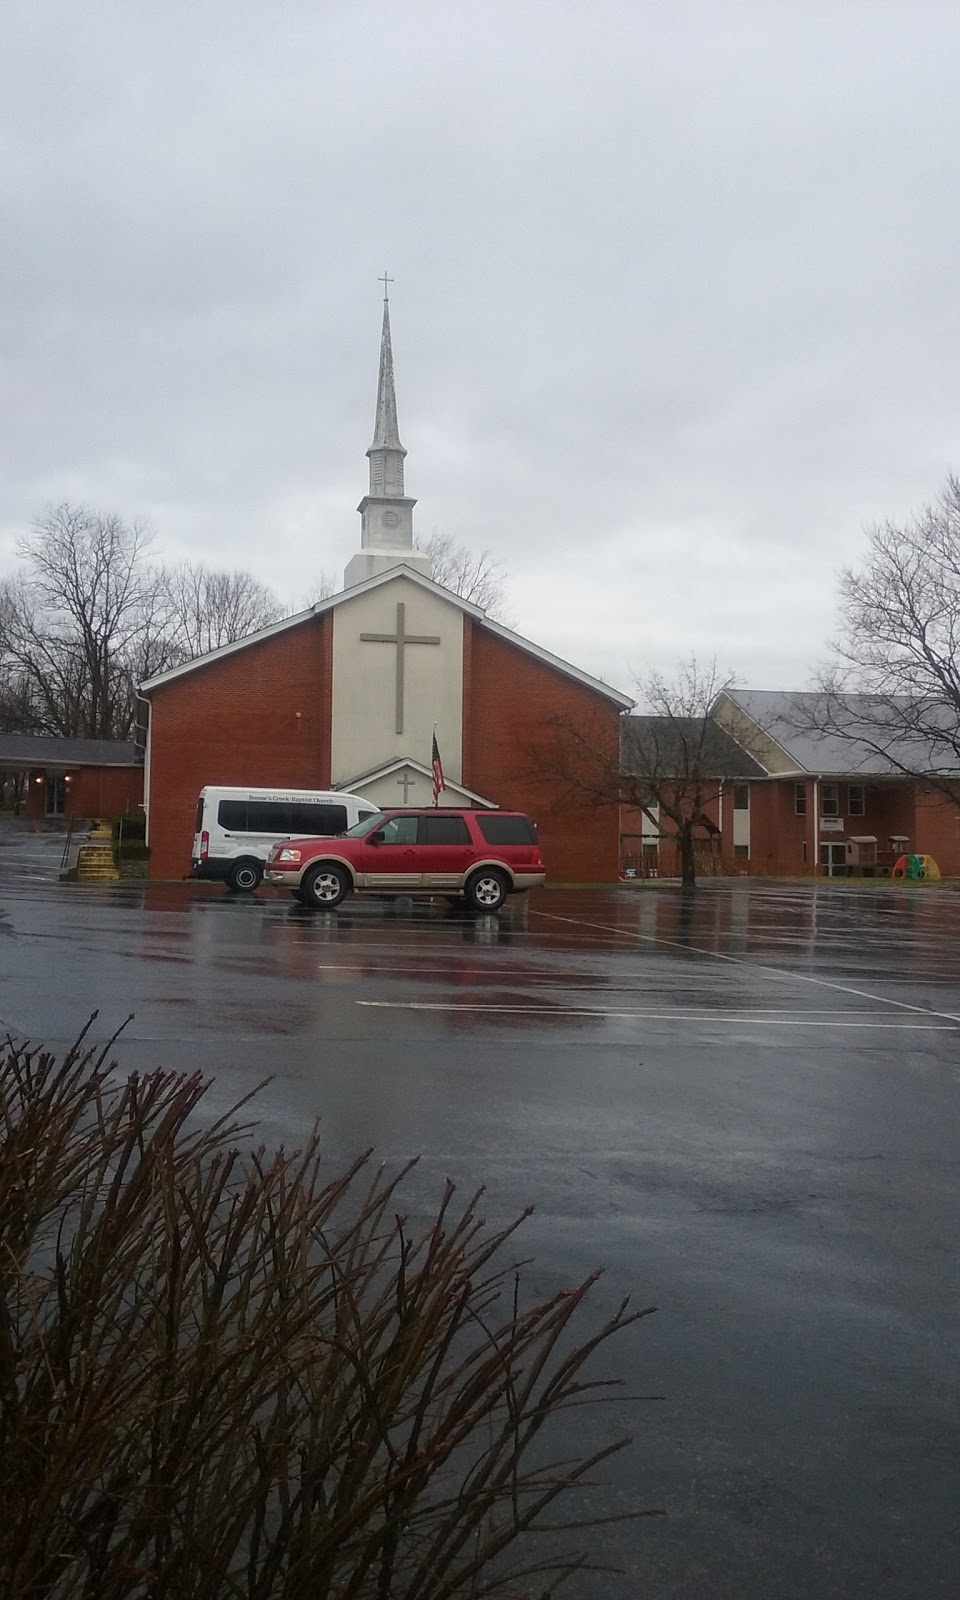 Boones Creek Baptist Church | 185 N Cleveland Rd, Lexington, KY 40509, USA | Phone: (859) 263-5466